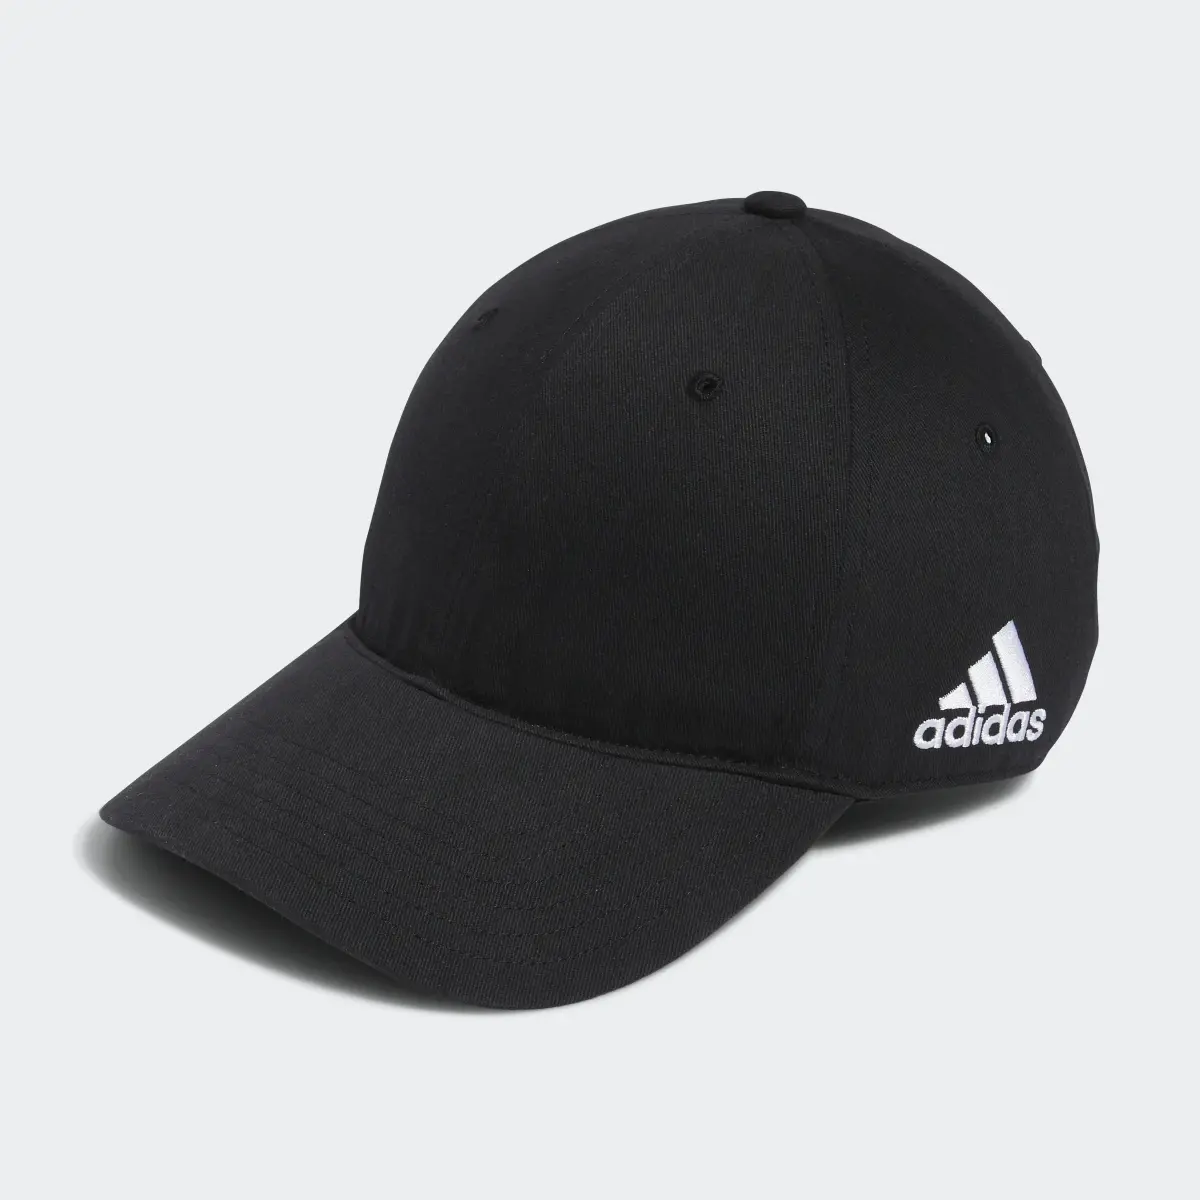 Adidas Cotton Front Crestable Hat. 2